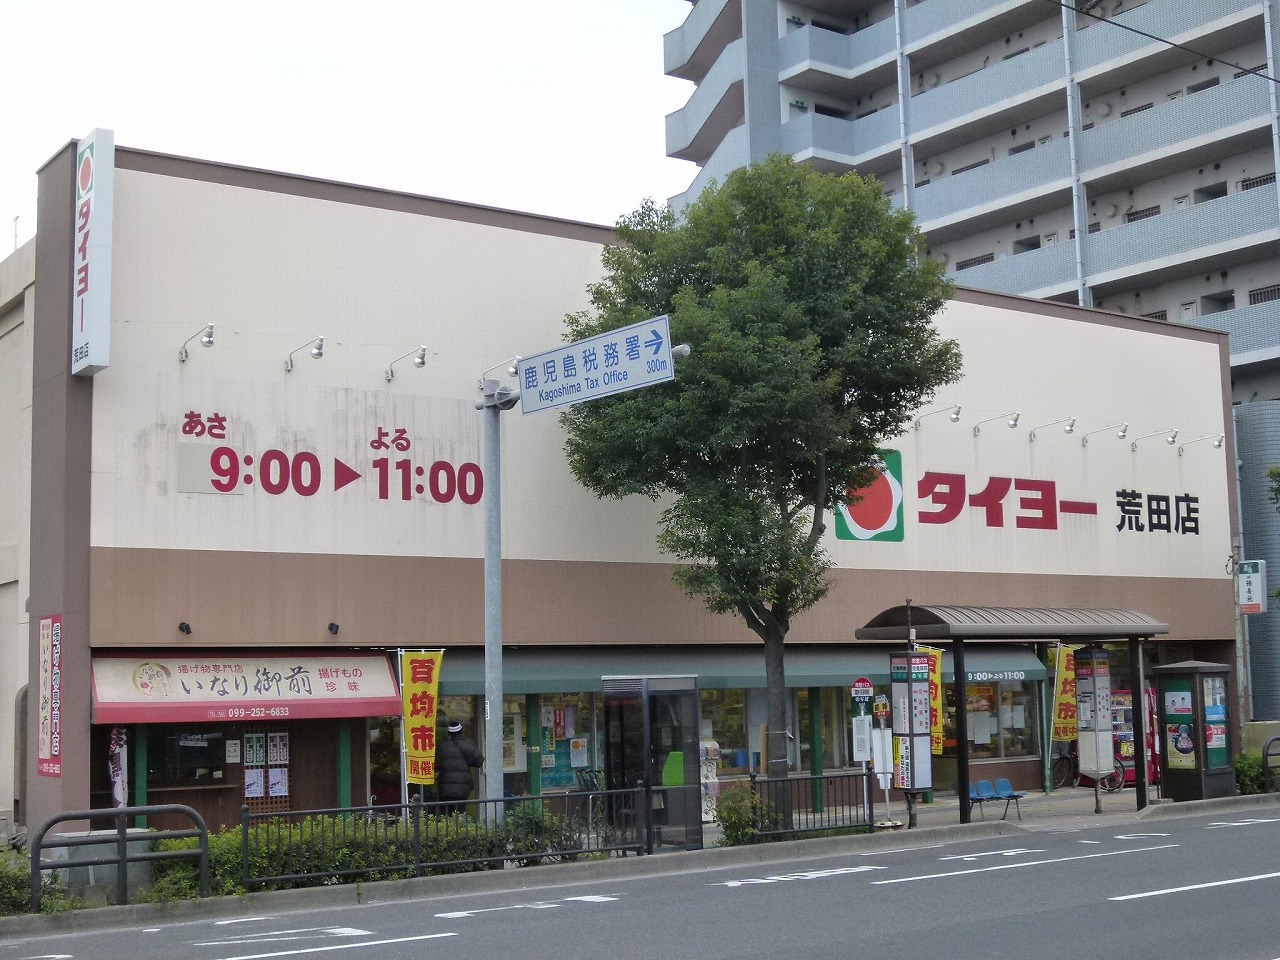 Supermarket. Taiyo Arata store up to (super) 96m